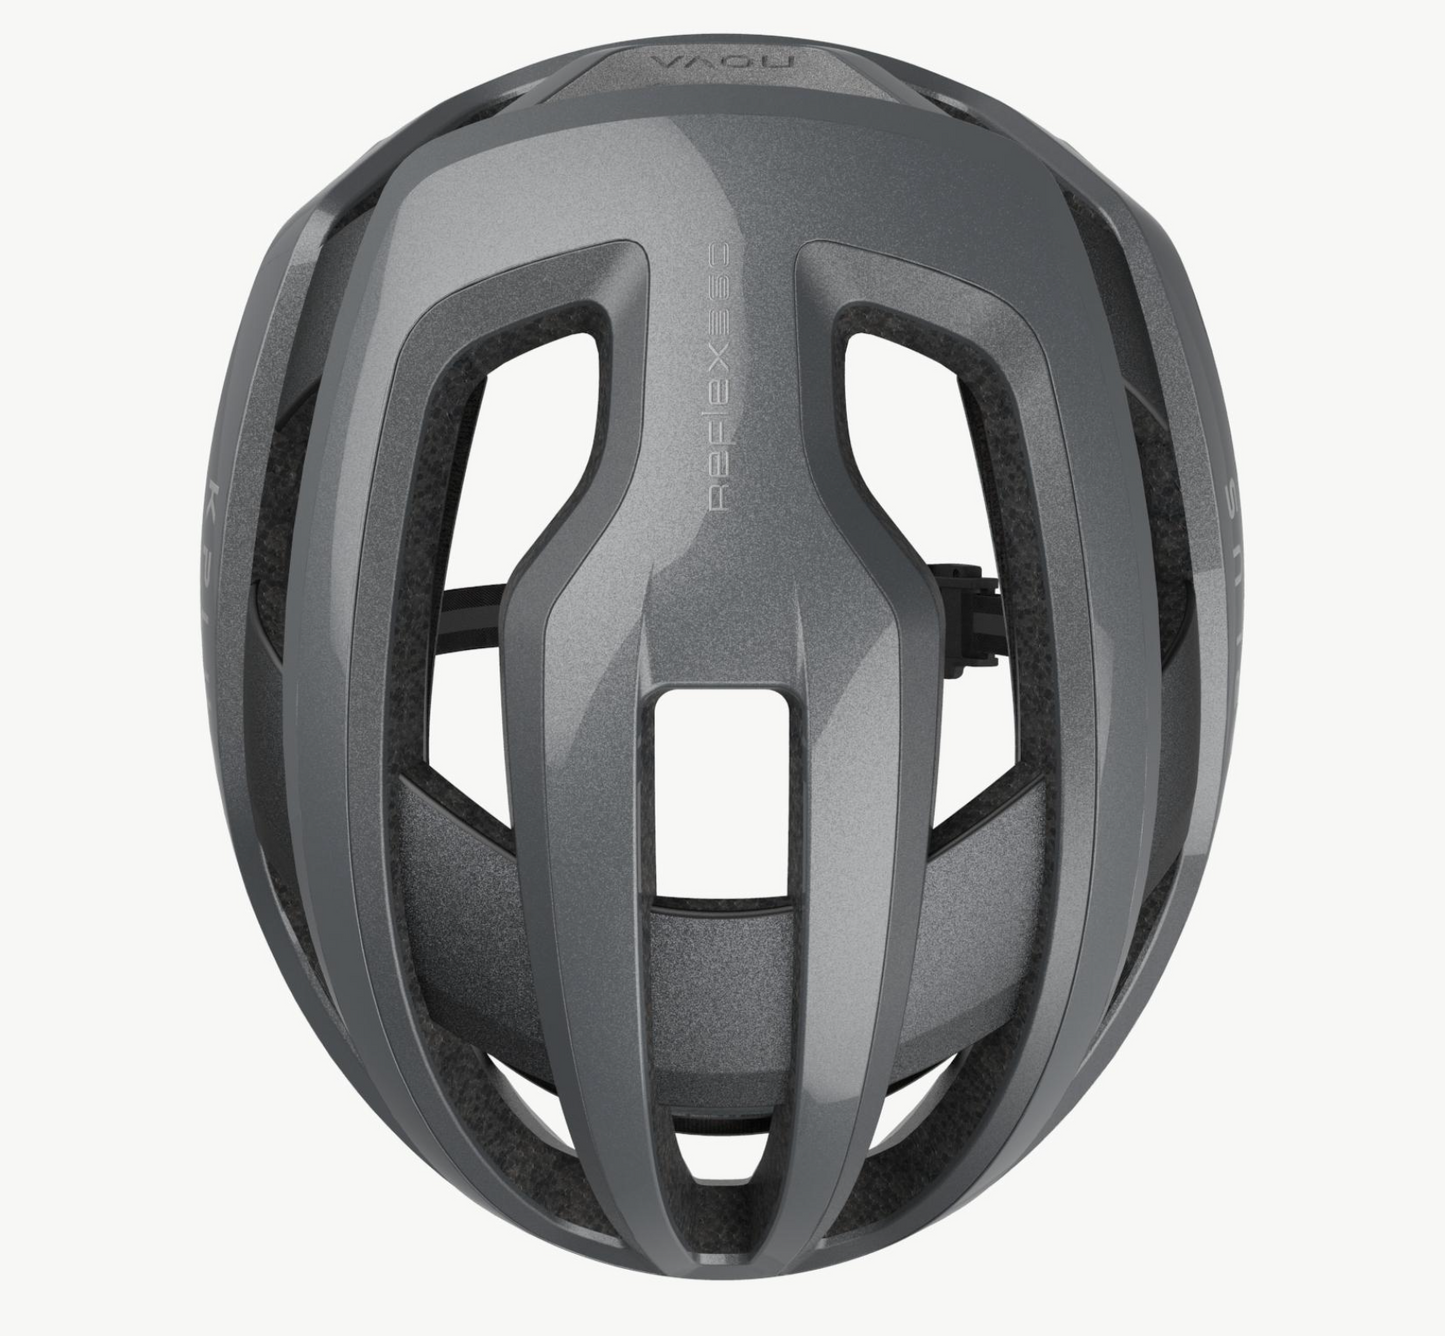 KPLUS NOVA Cycling Helmet Grey - Medium